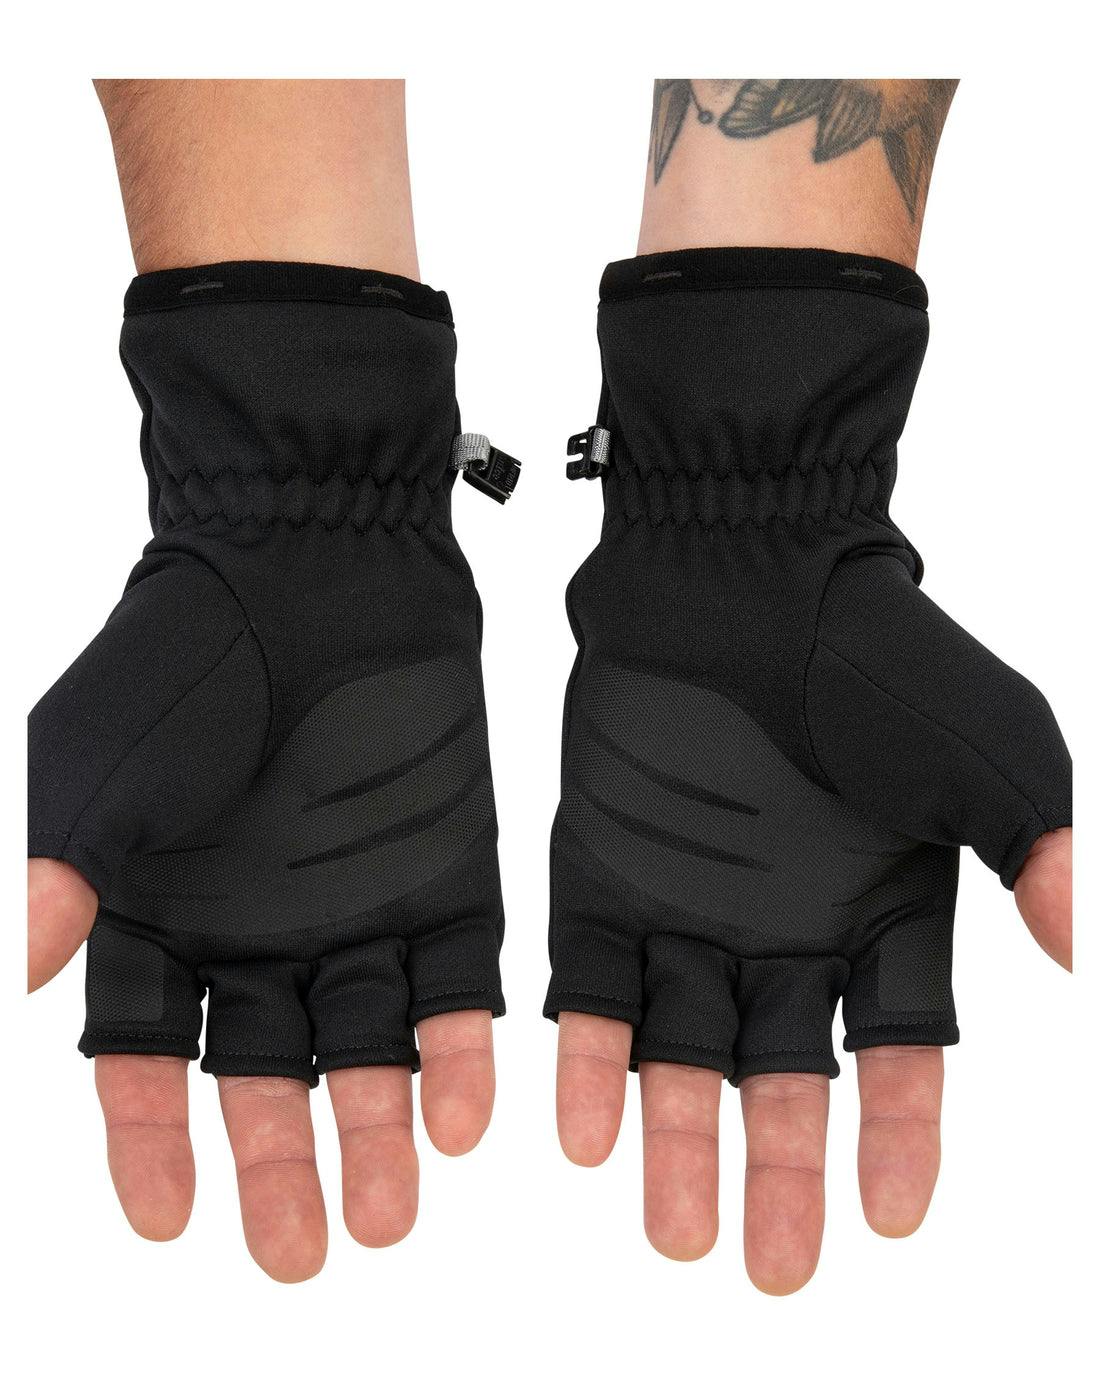 Simms Freestone Half Finger Glove